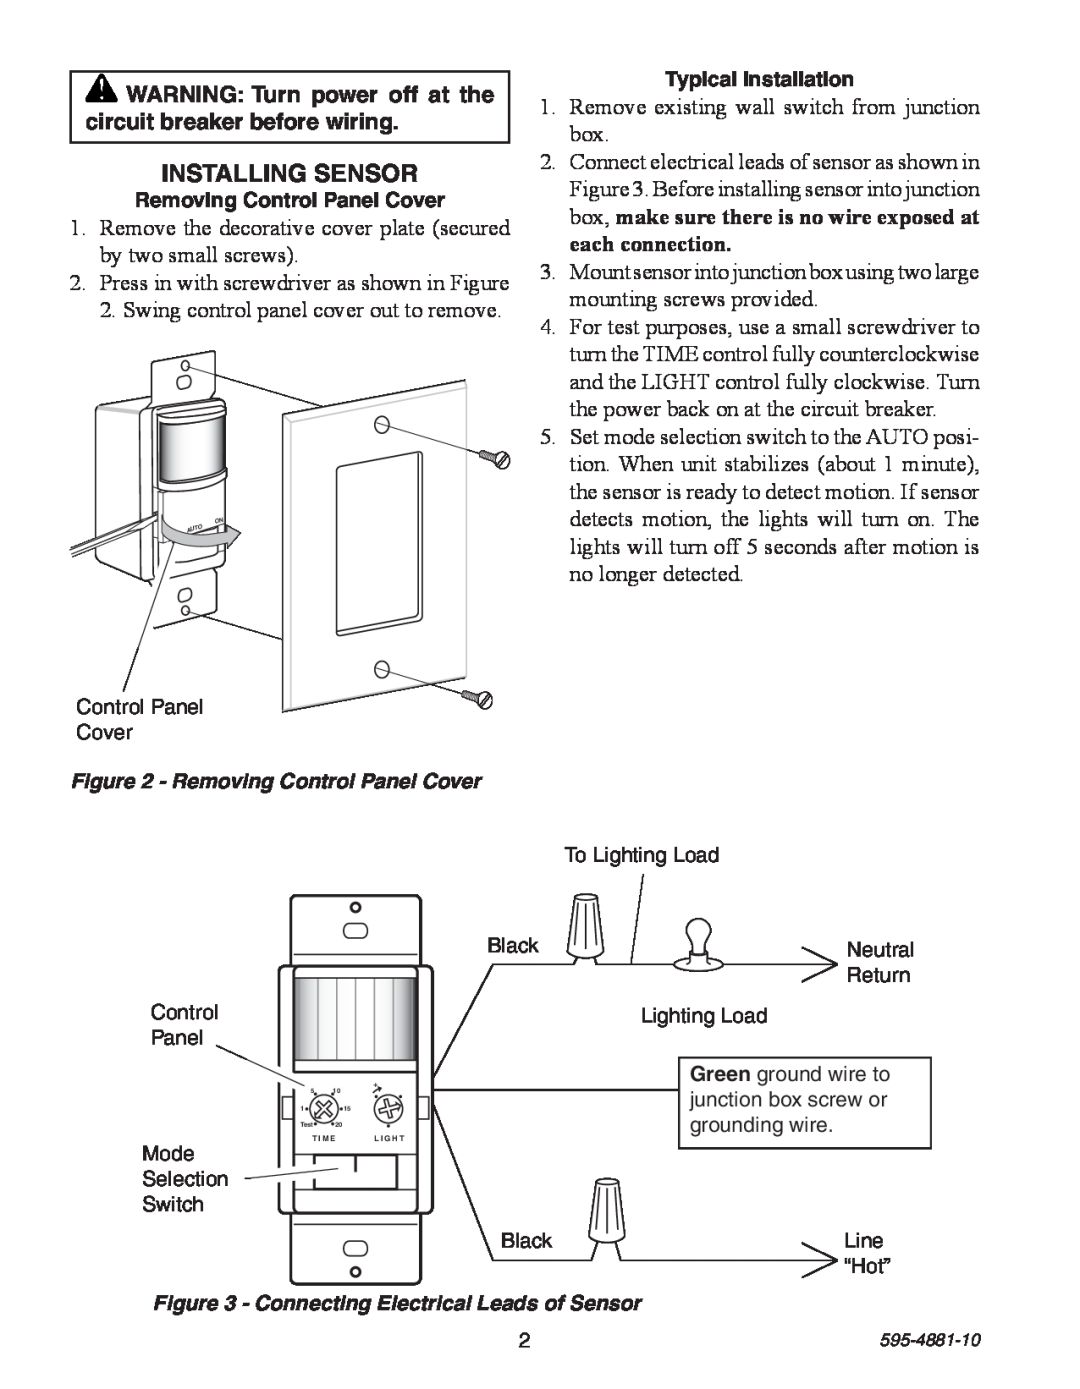 Heath Zenith SL-6105 manual Installing Sensor 